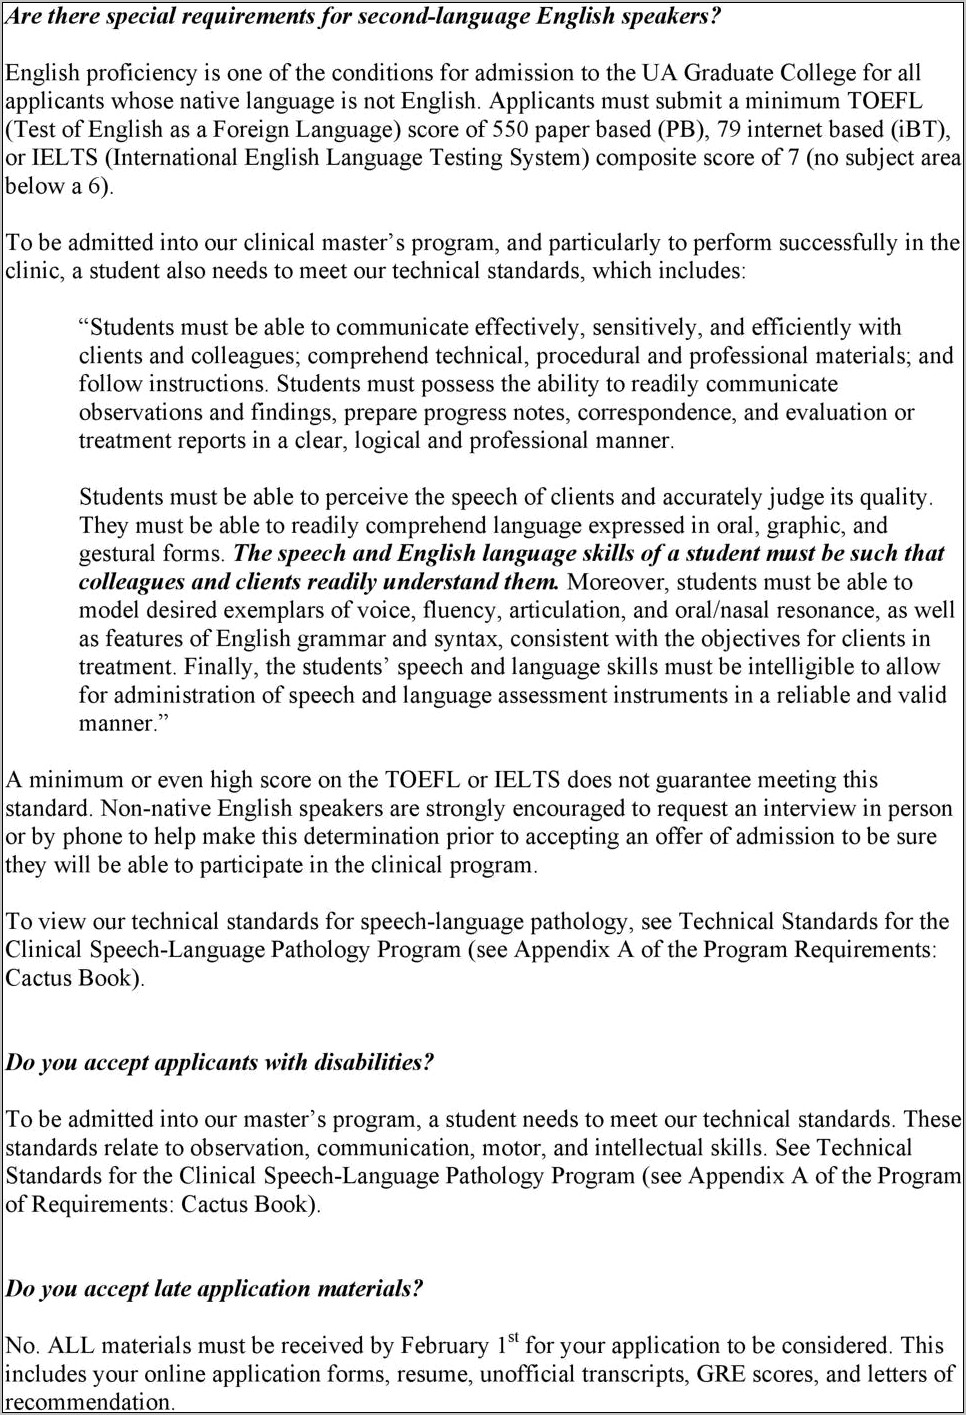 Sample Resume For Speech Pathology Grad School